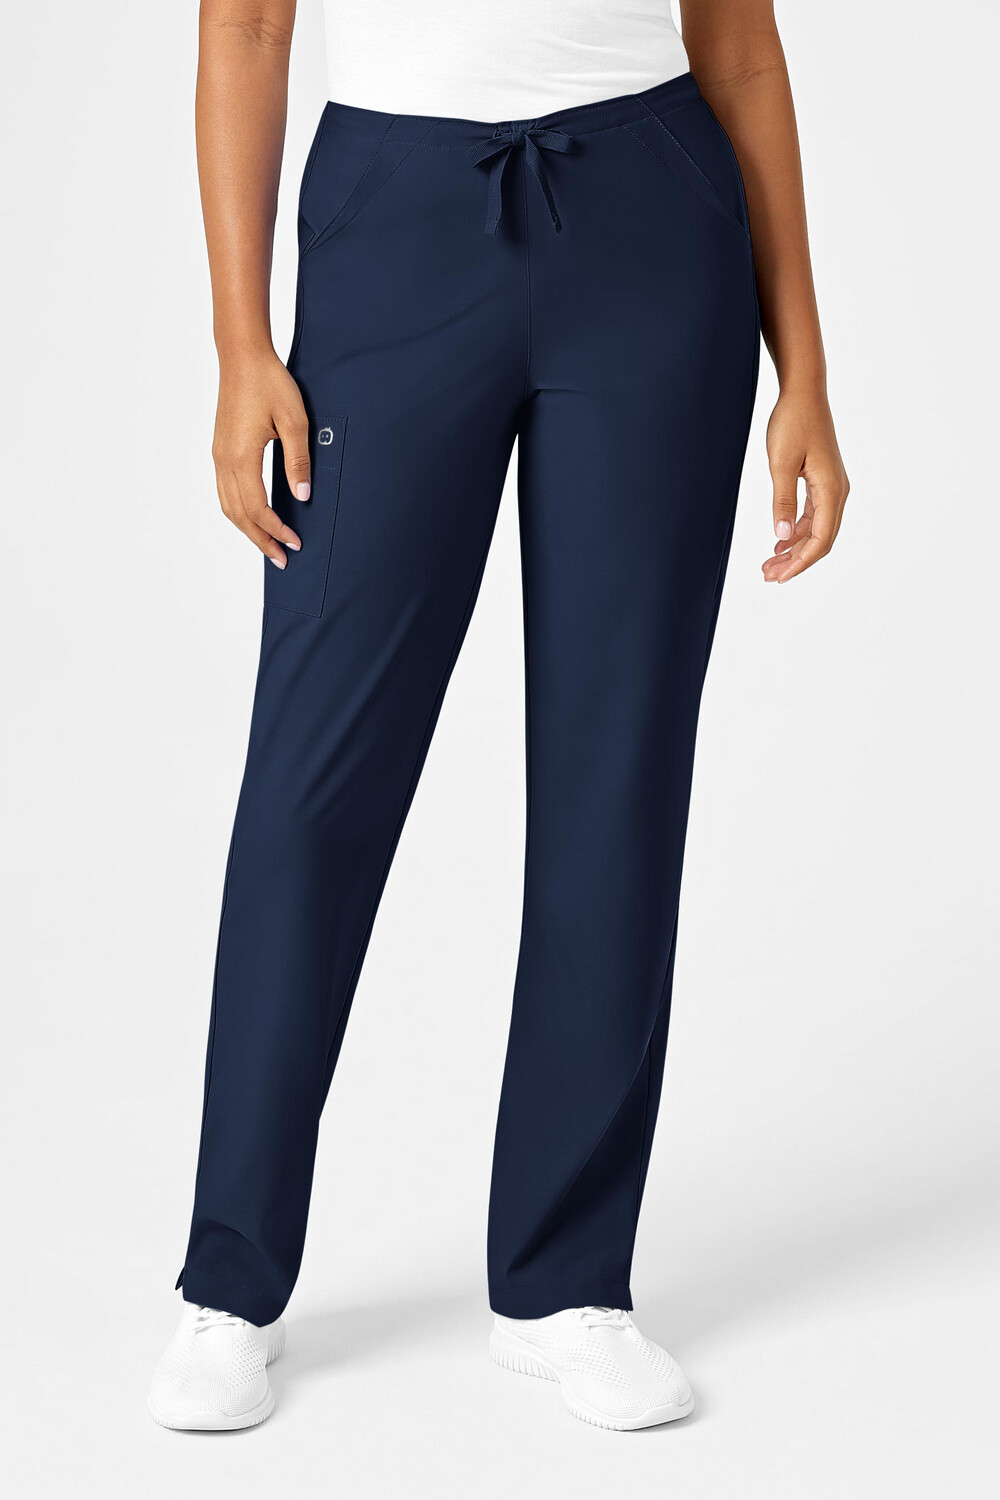 Pantalone donna 5255 navy blue